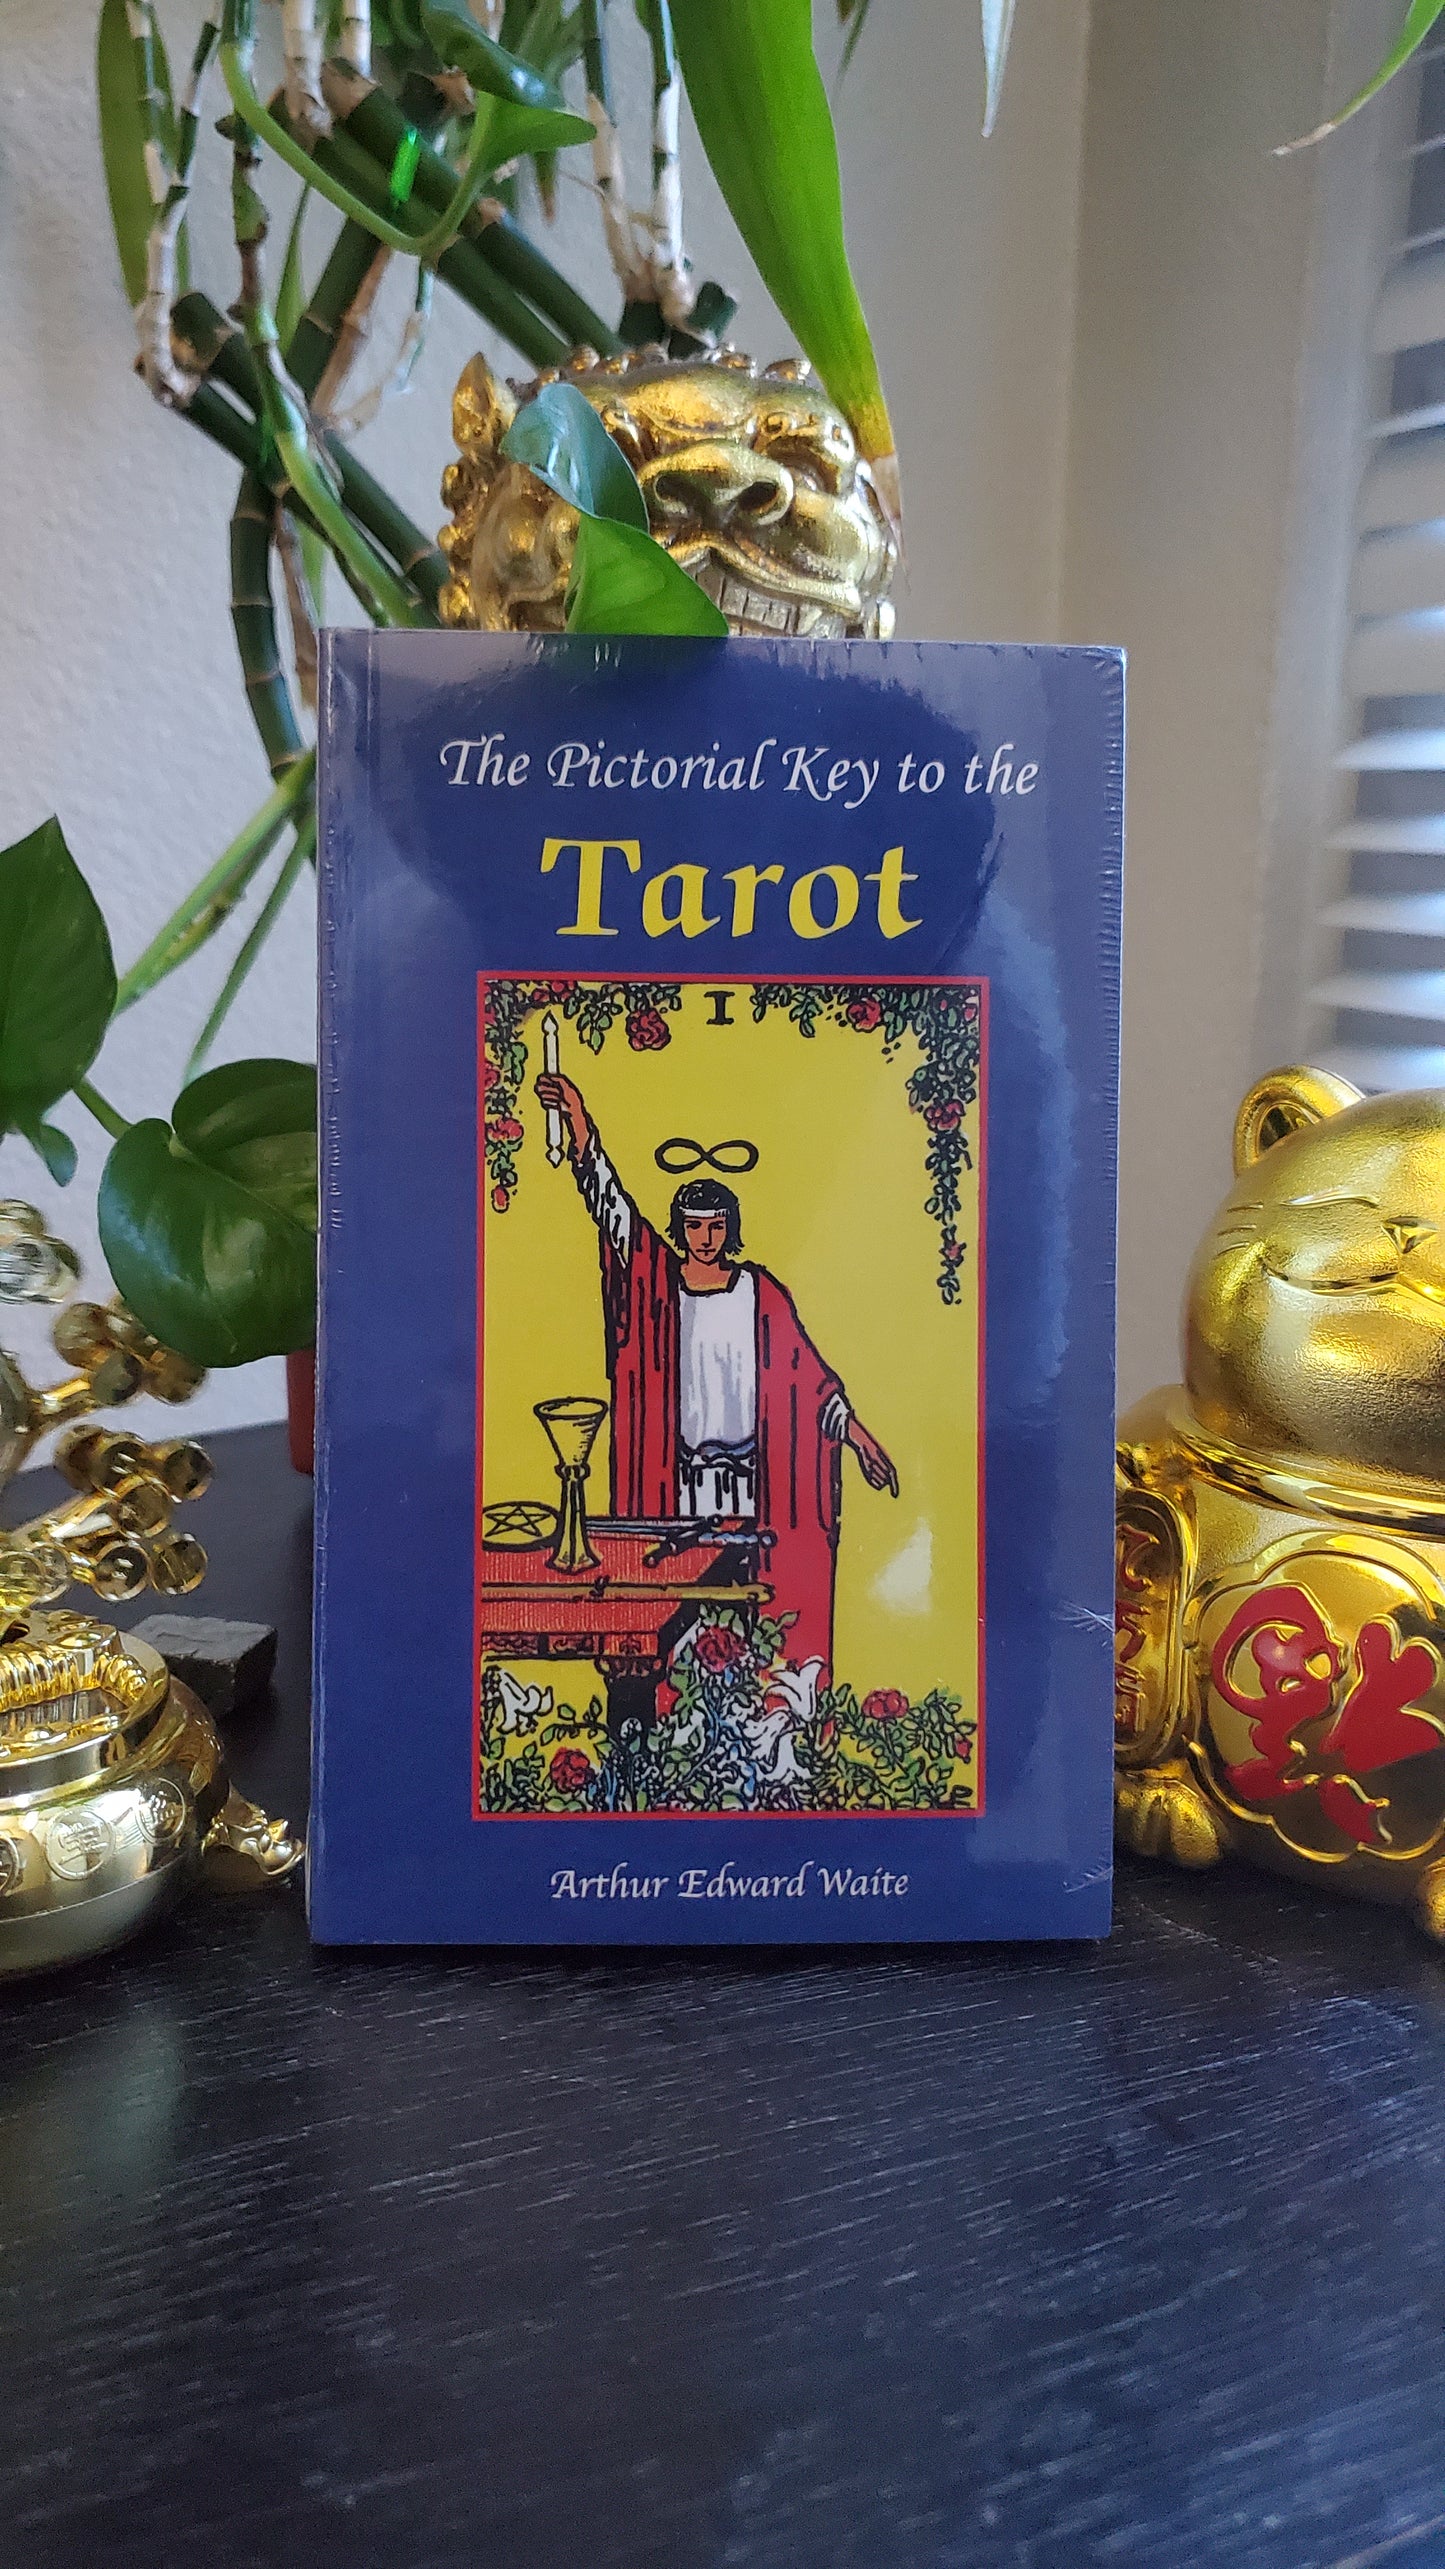 Pictorial Key To Tarot Instruction Booklet by Arthur Edward Waite, Classic Tarot Deck, #Tarot #Divination #TarotCards #DivinationTools